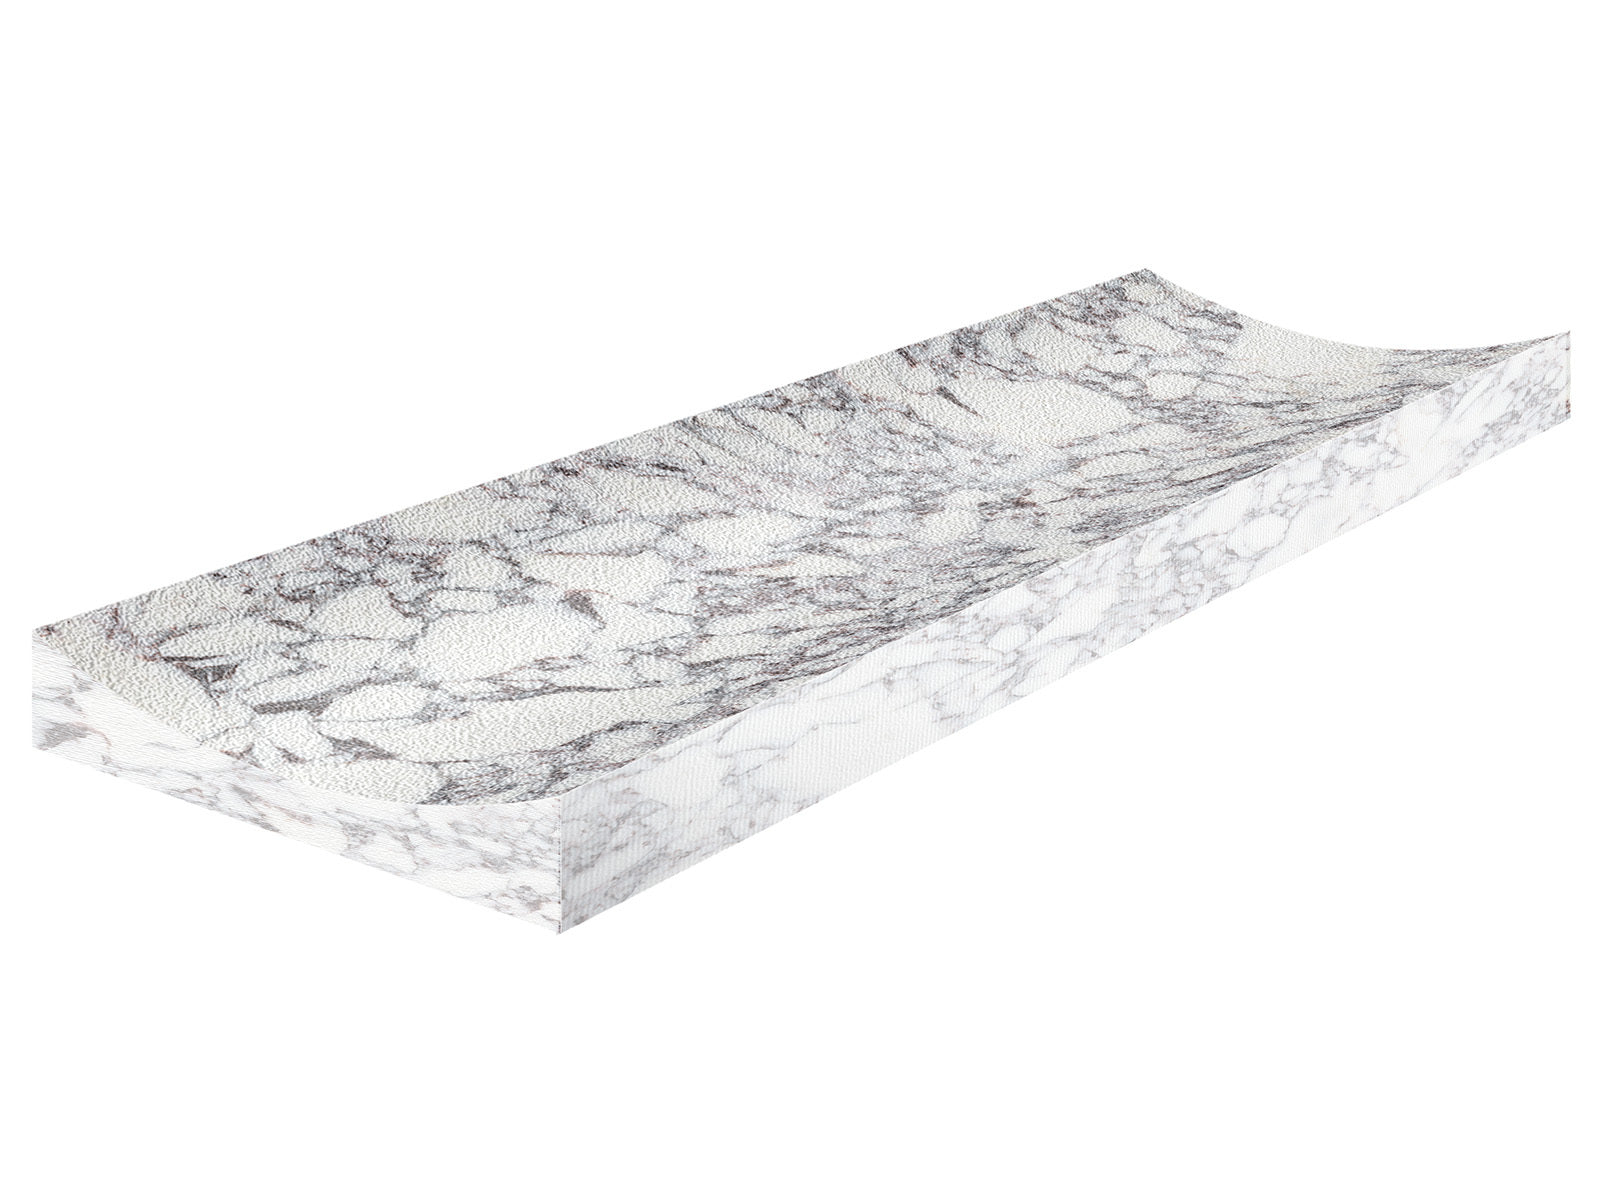 surface group anatolia marble viola roccia natural stone fluto tile honed straight edge rectangle 4х12